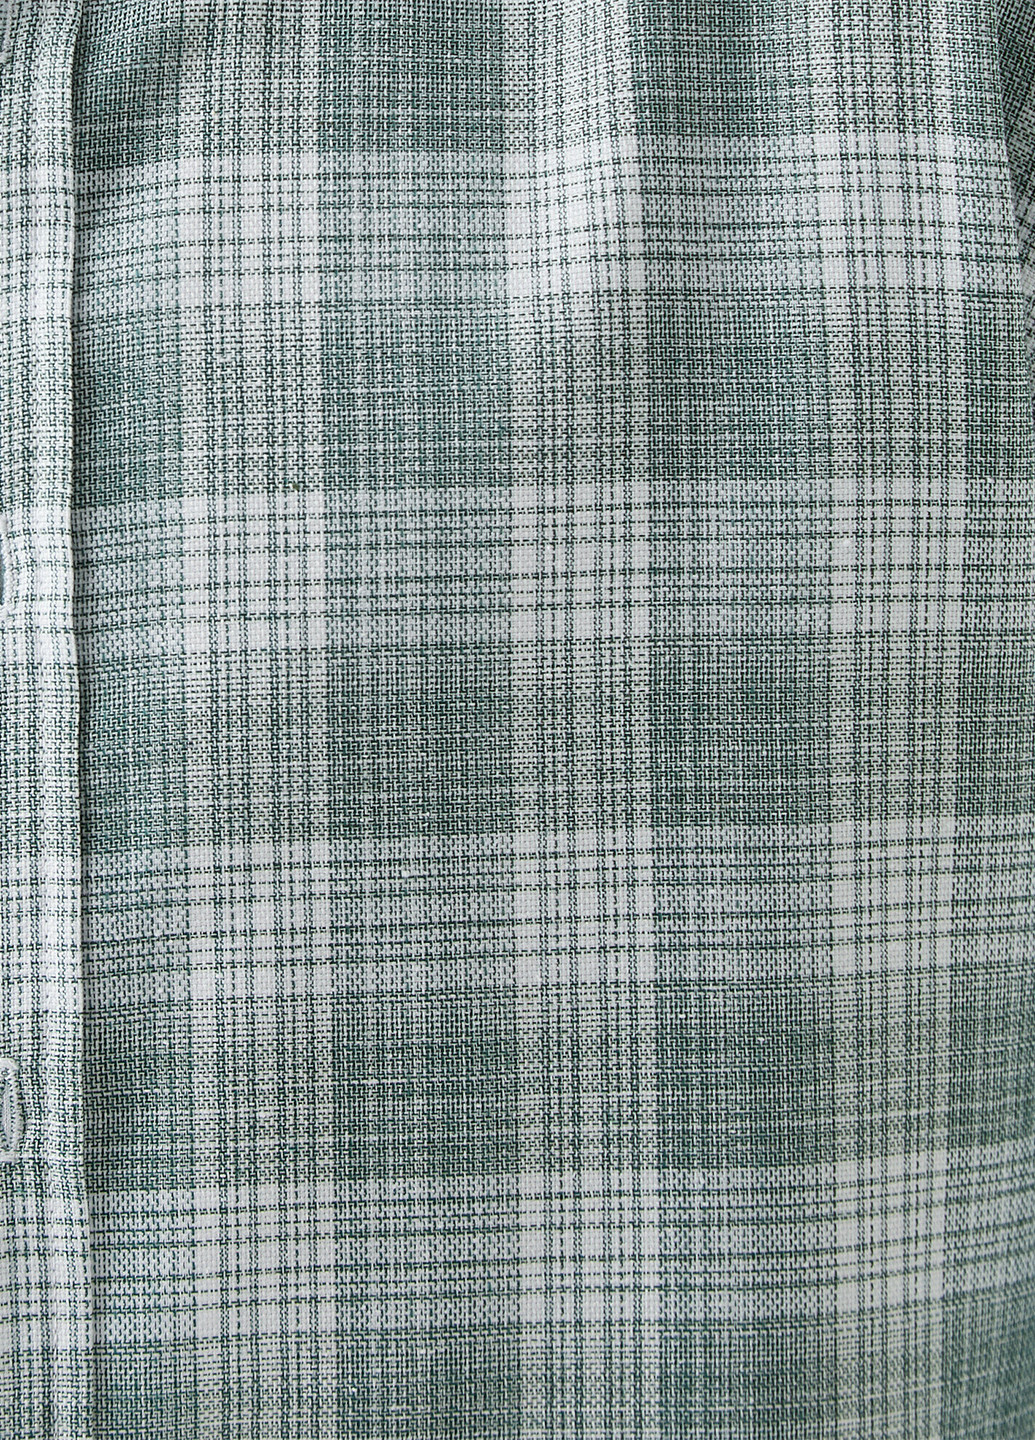 Светло-зеленая кэжуал рубашка KOTON